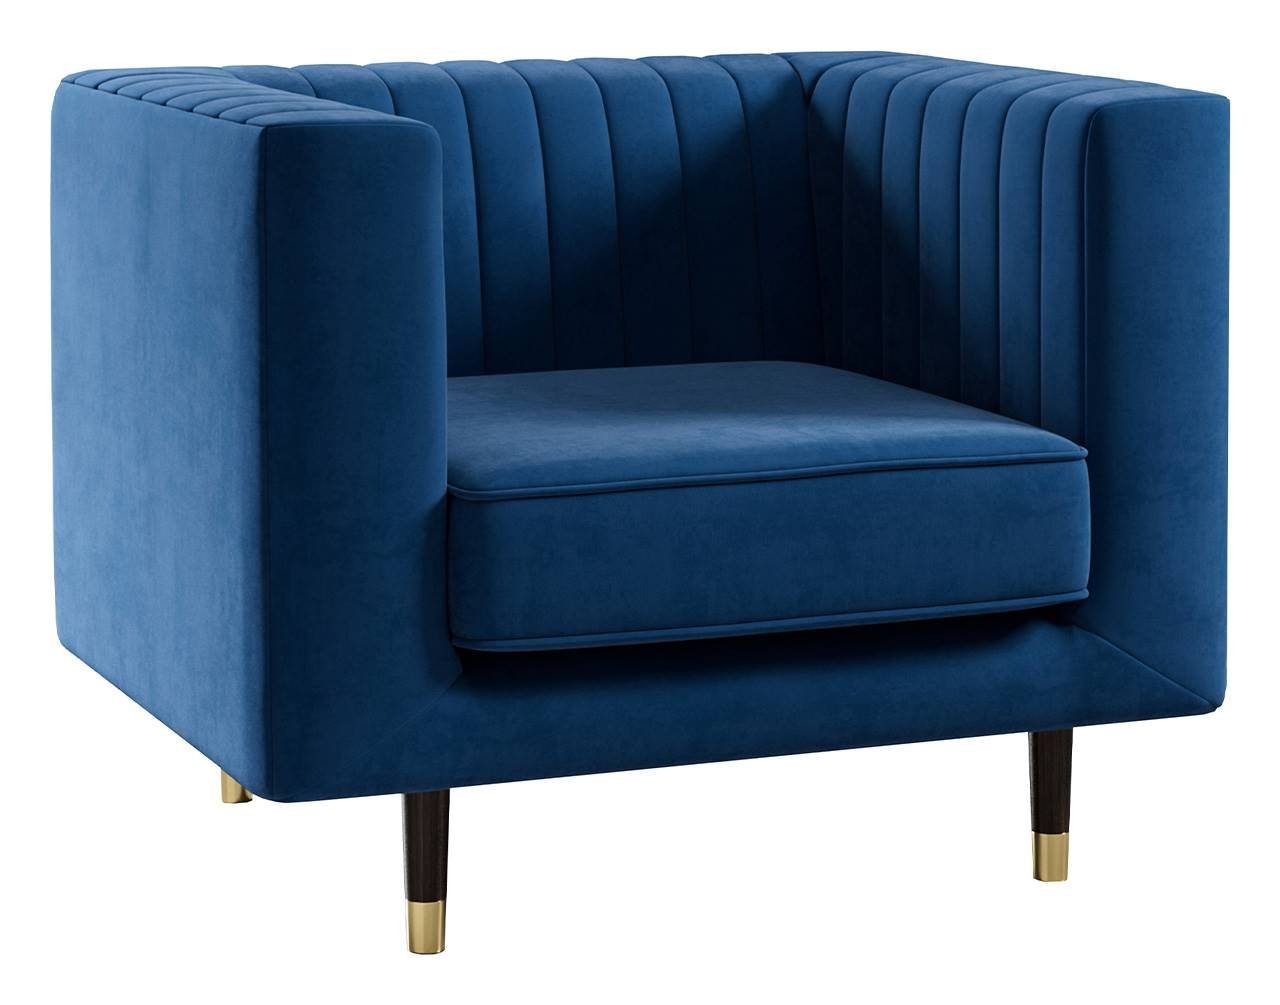 MKS MÖBEL Sofa blau moderner Elmo, Stil, exklusiver kronos Look